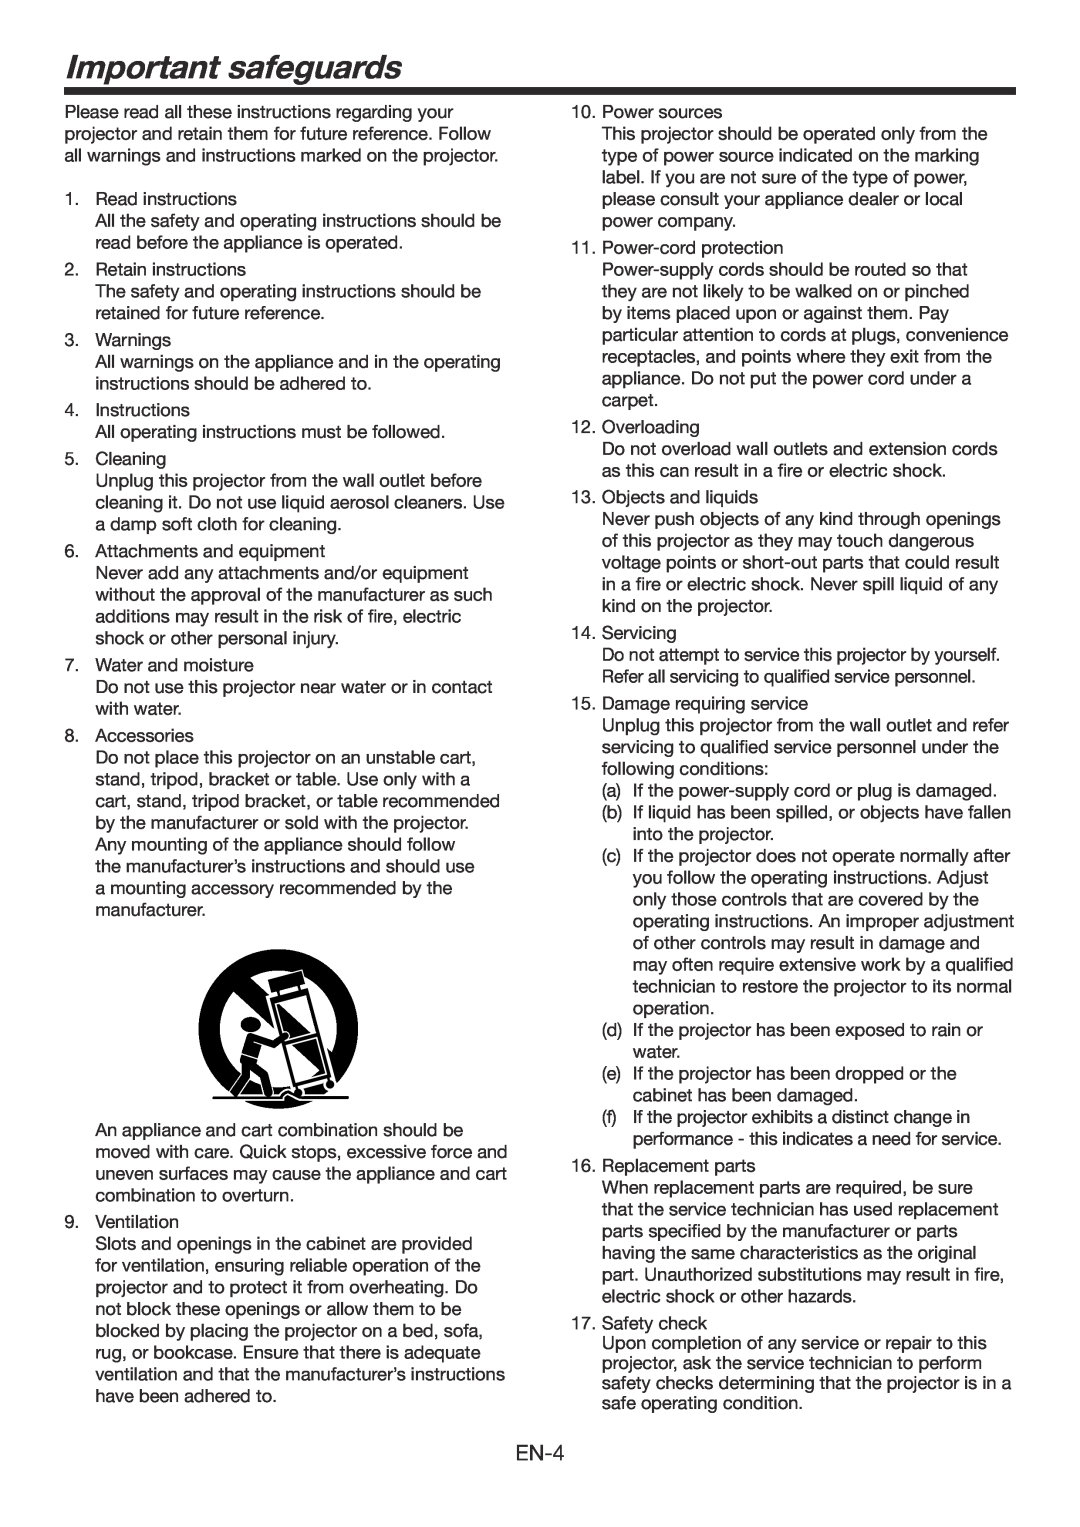 Mitsumi electronic WD3300U user manual Important safeguards, EN-4 